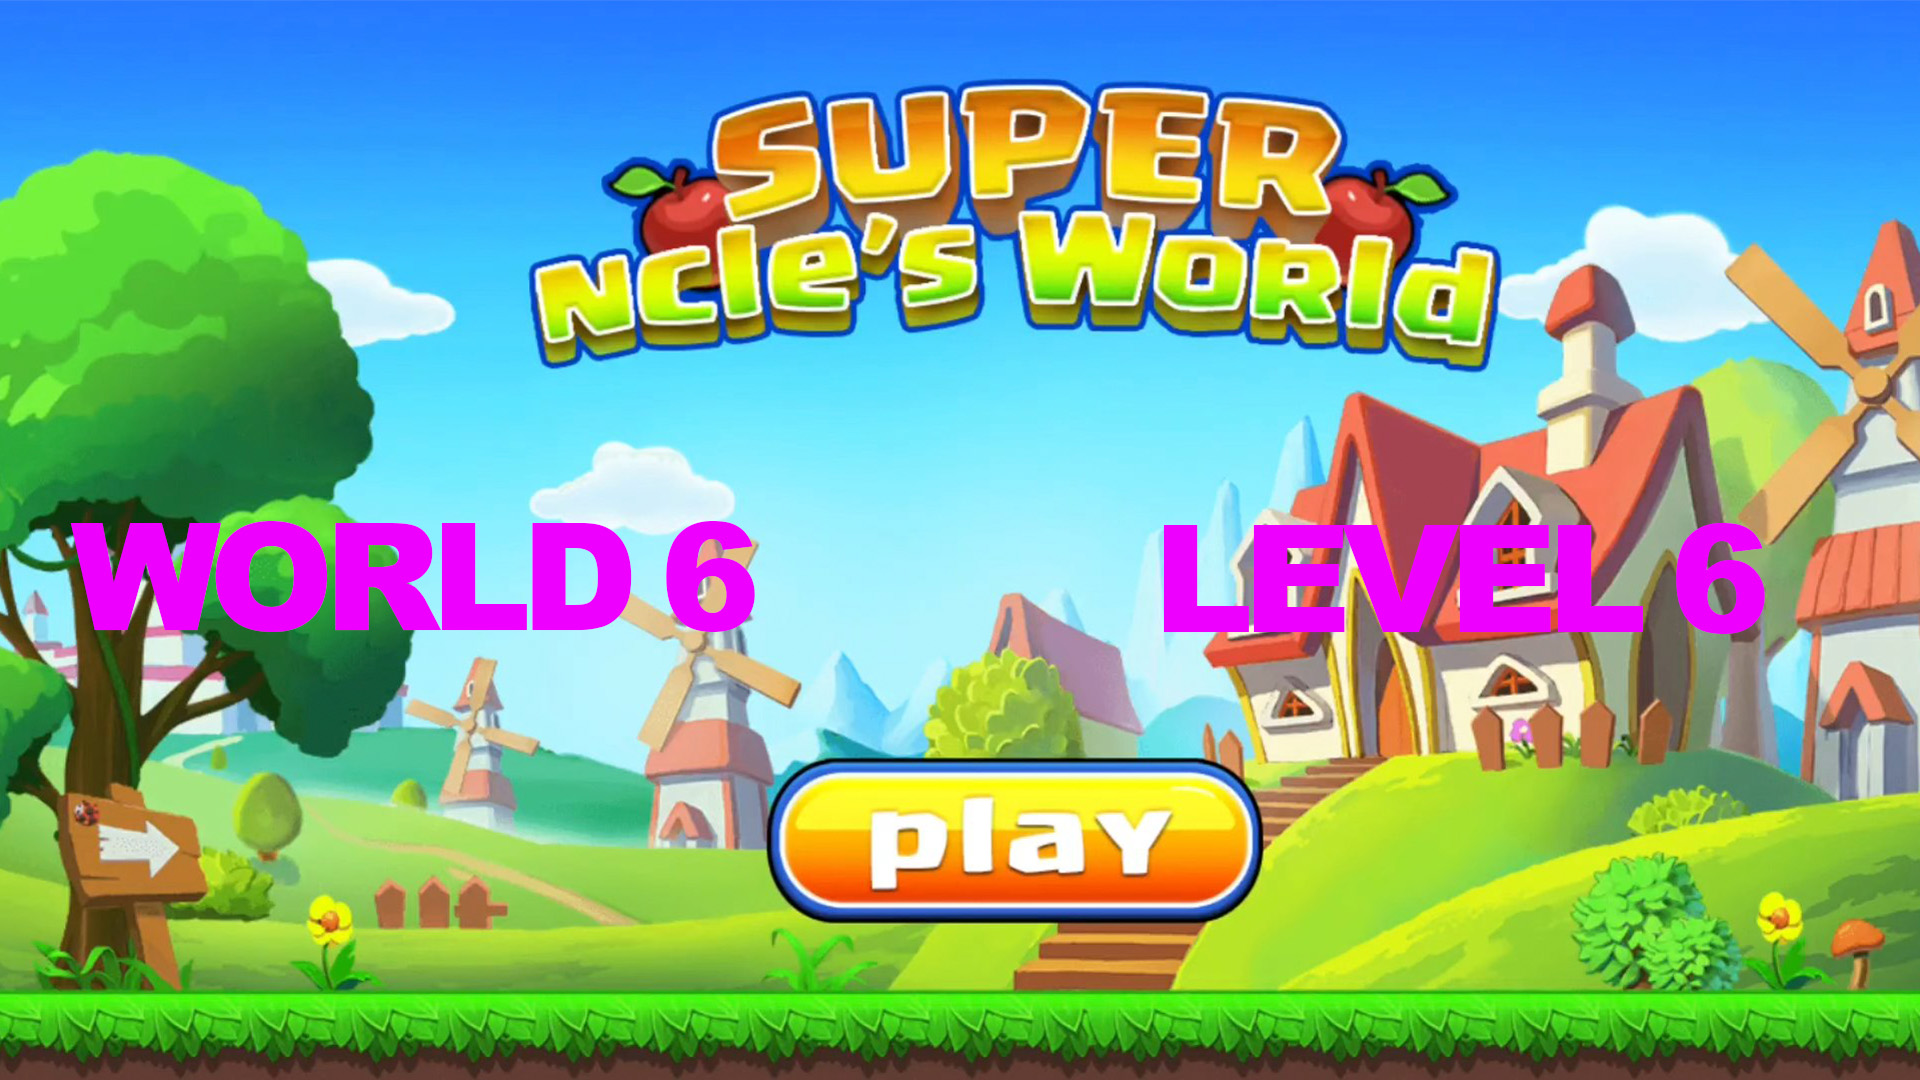 Super ncle's  World 6. Level 6.